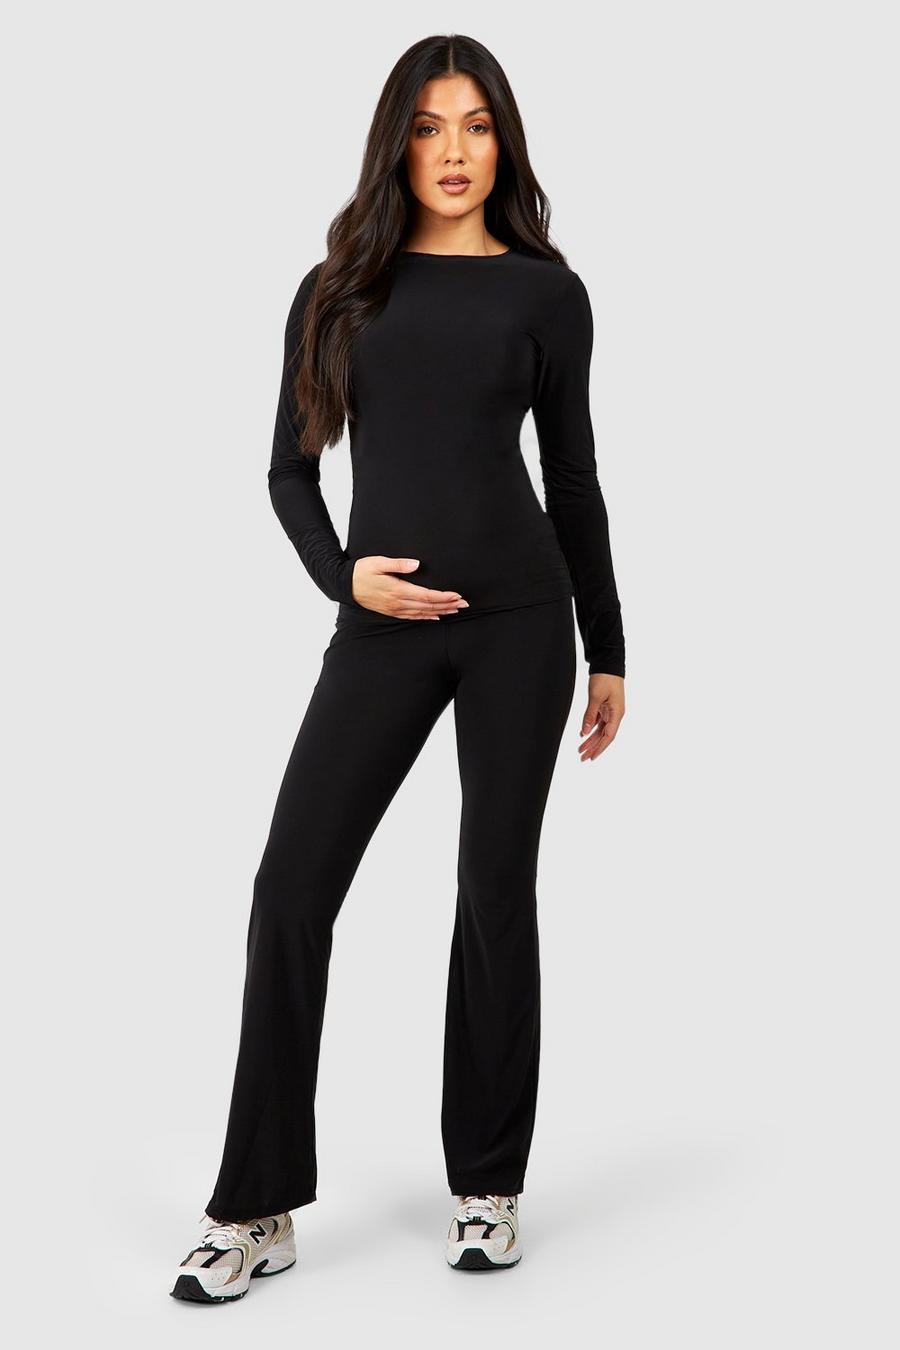 Black Maternity Soft Touch Yoga Pant Loungewear Set